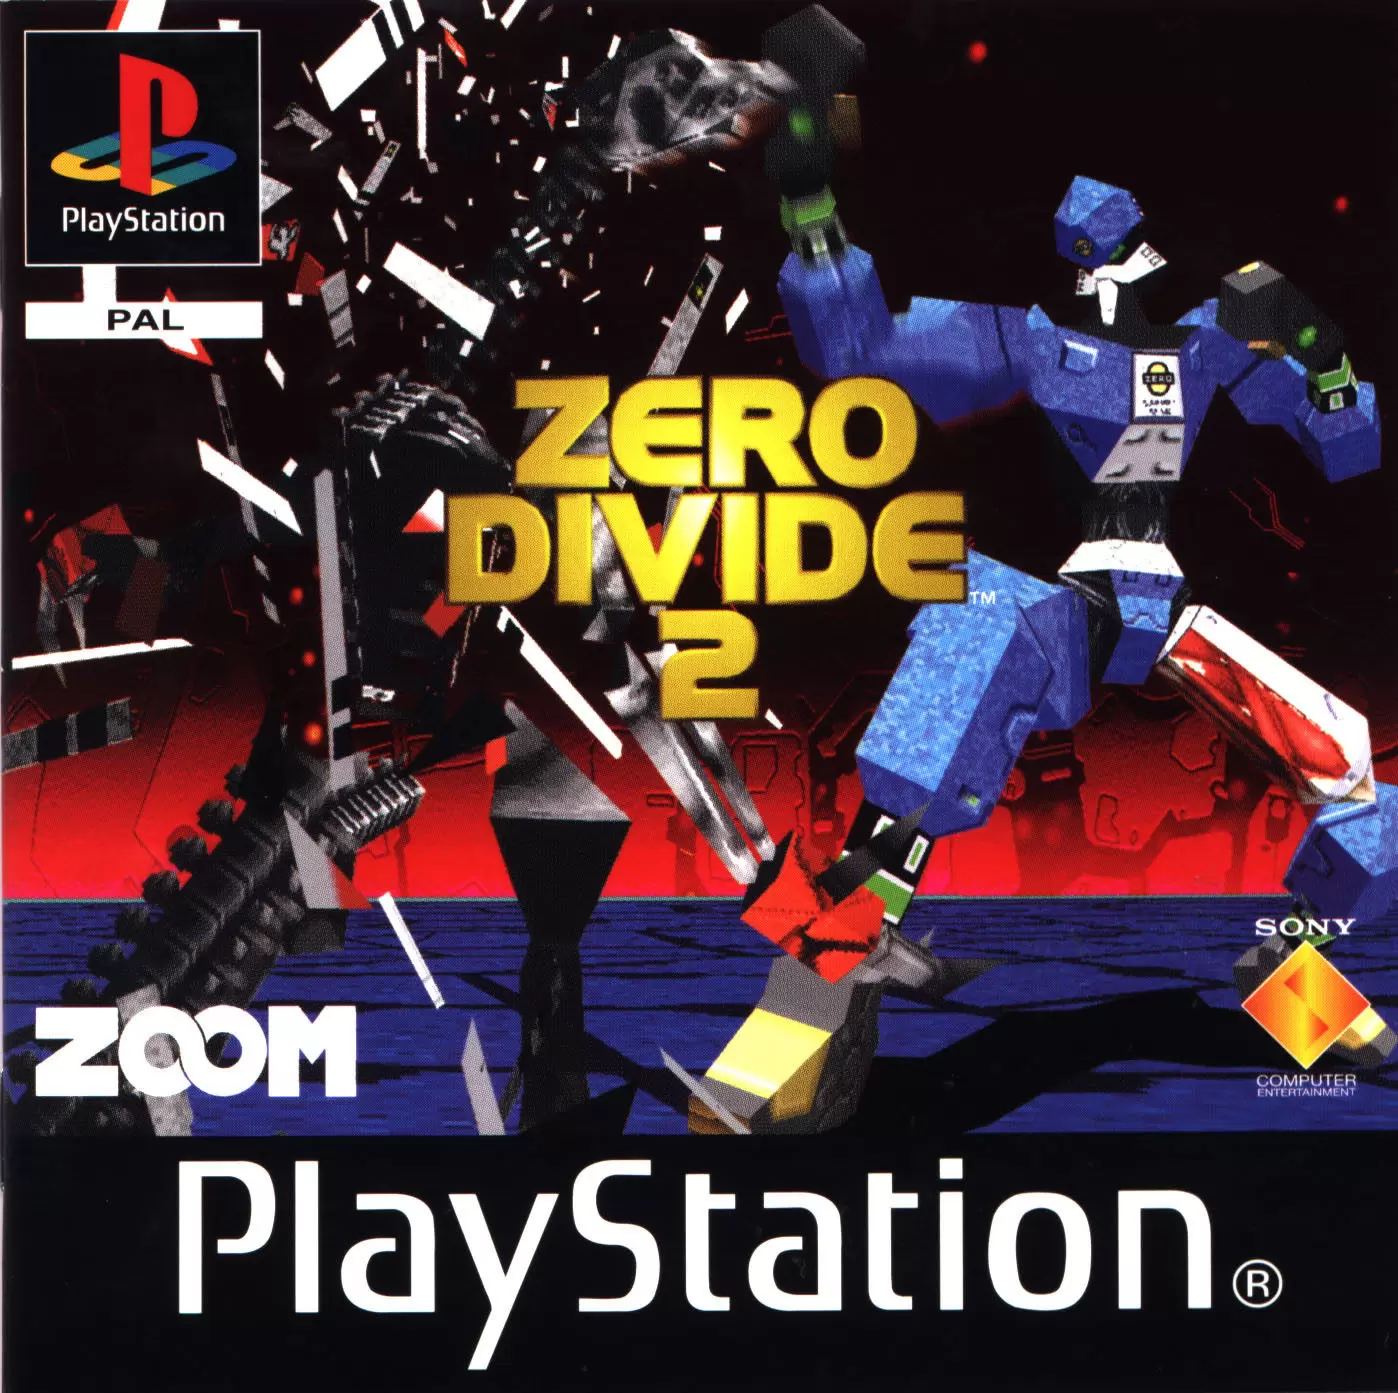 Playstation games - Zero Divide 2